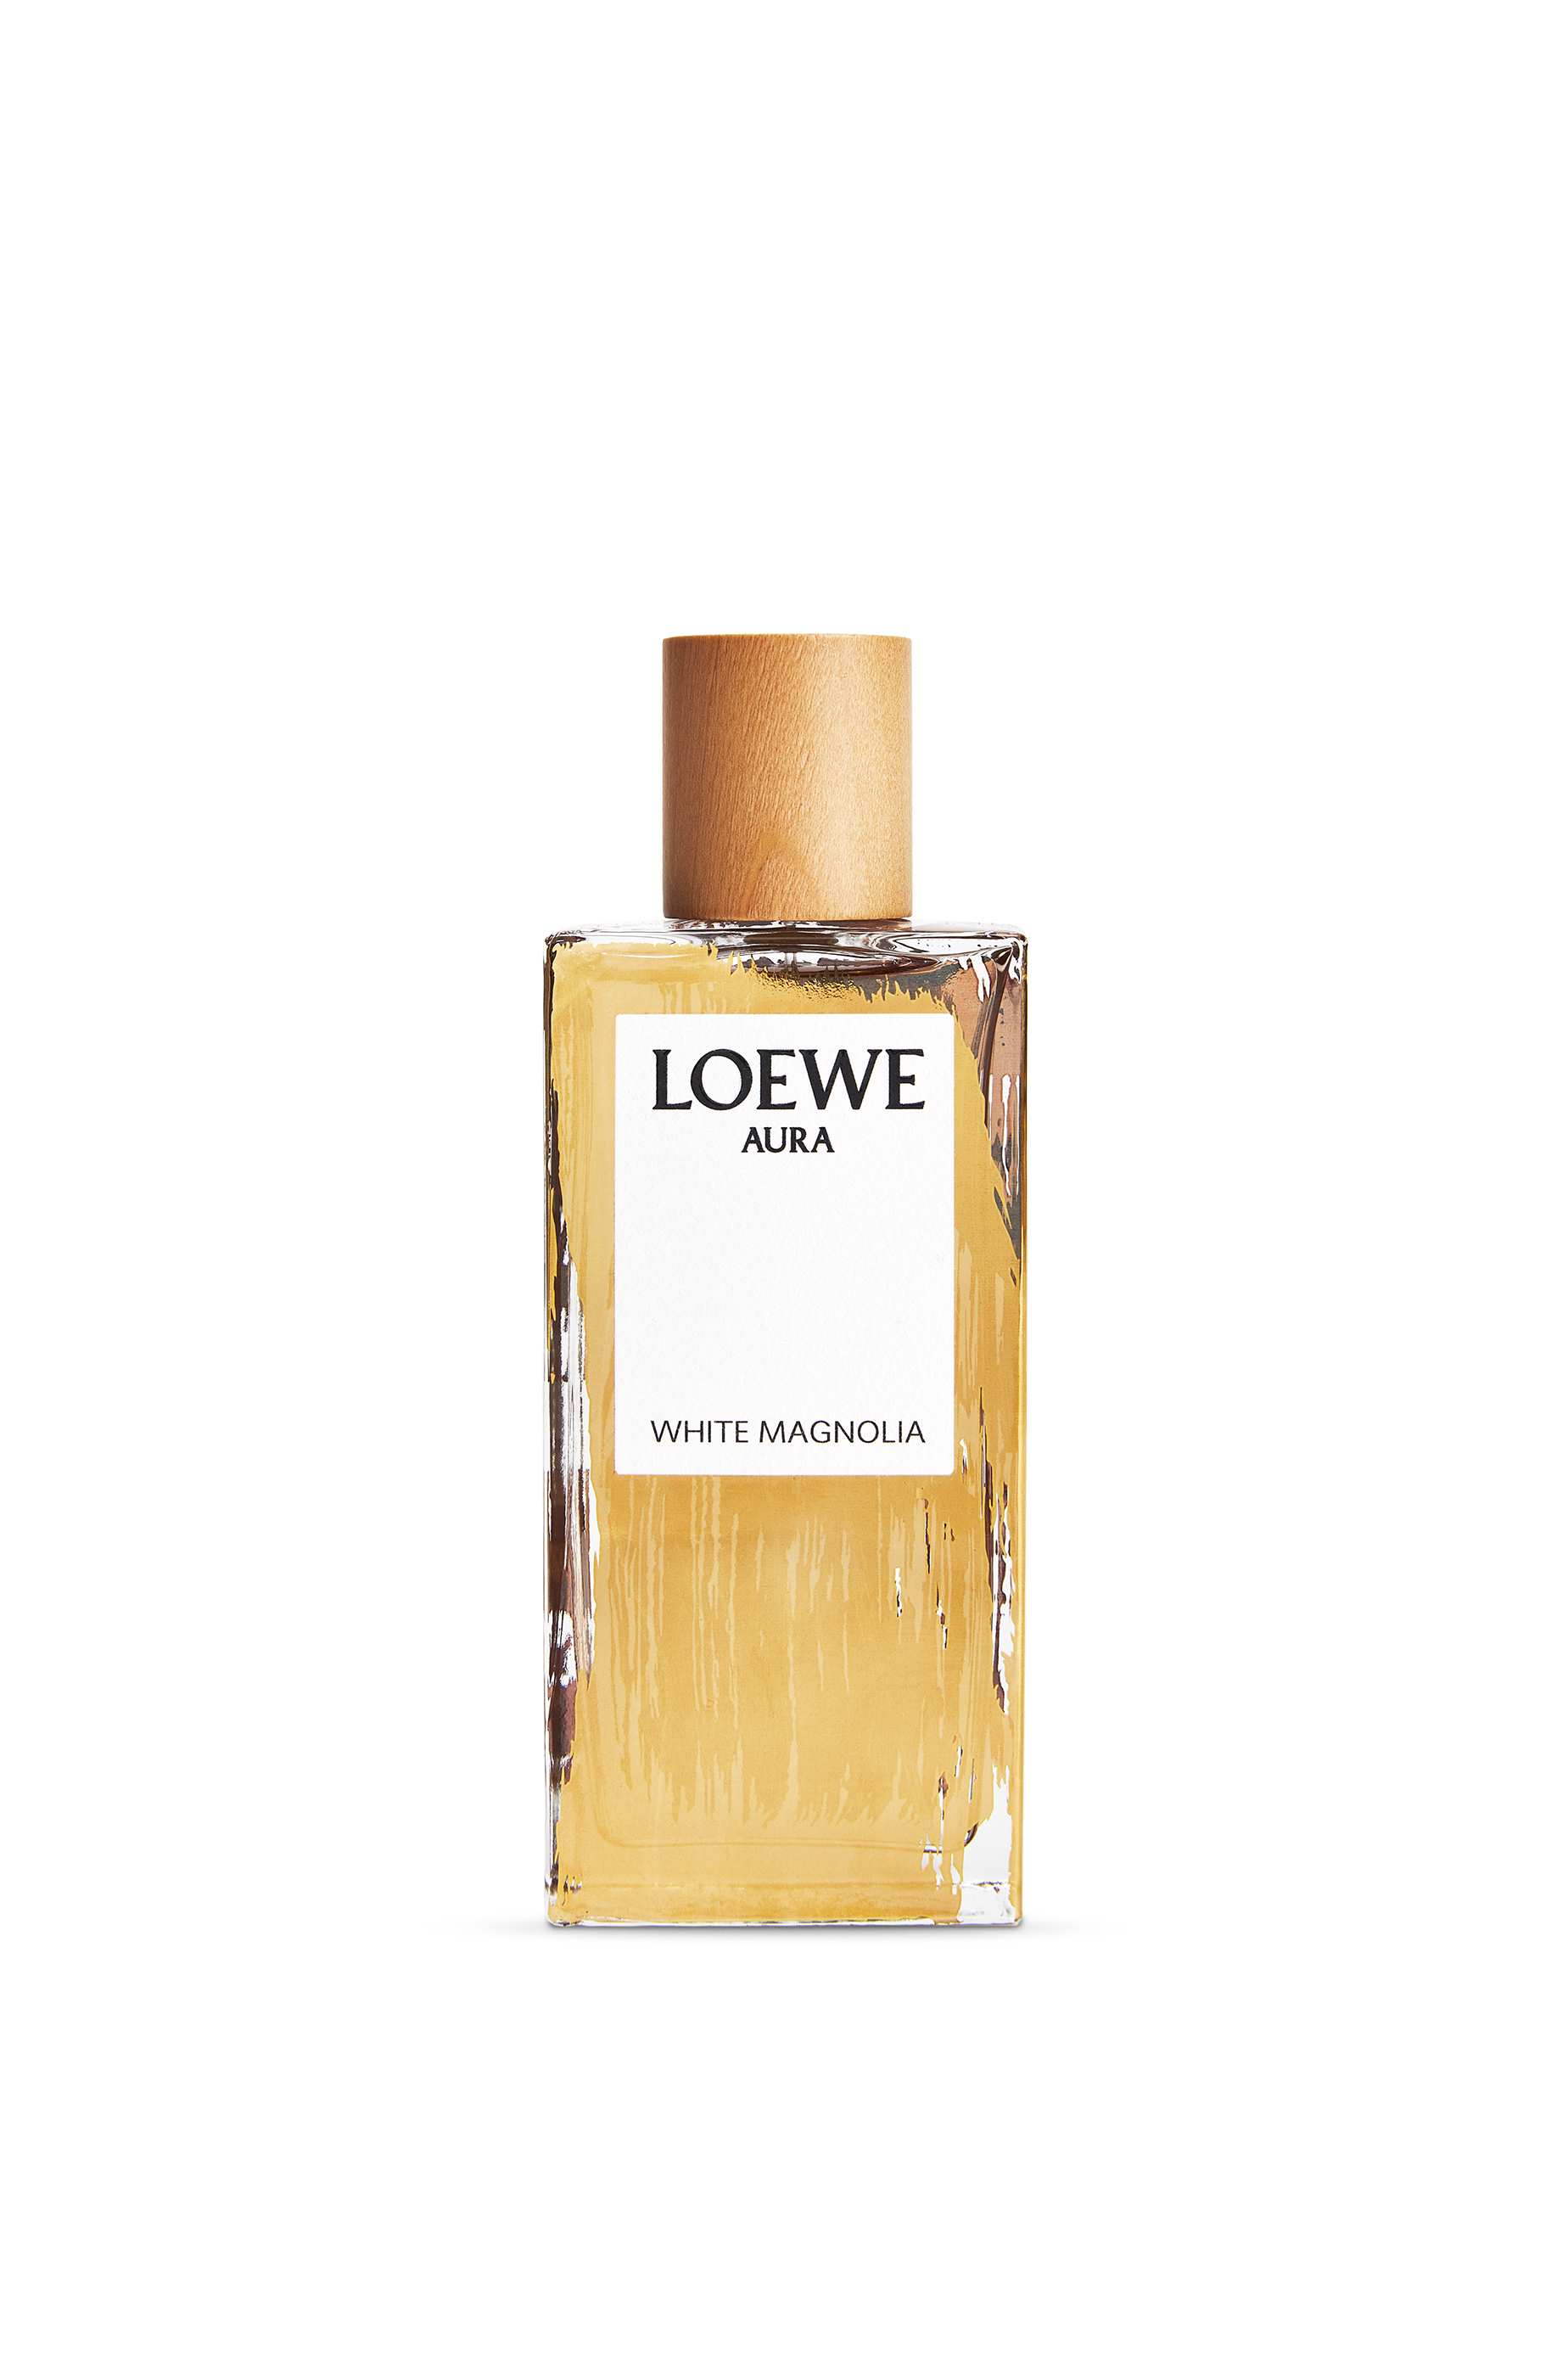 loewe perfume price